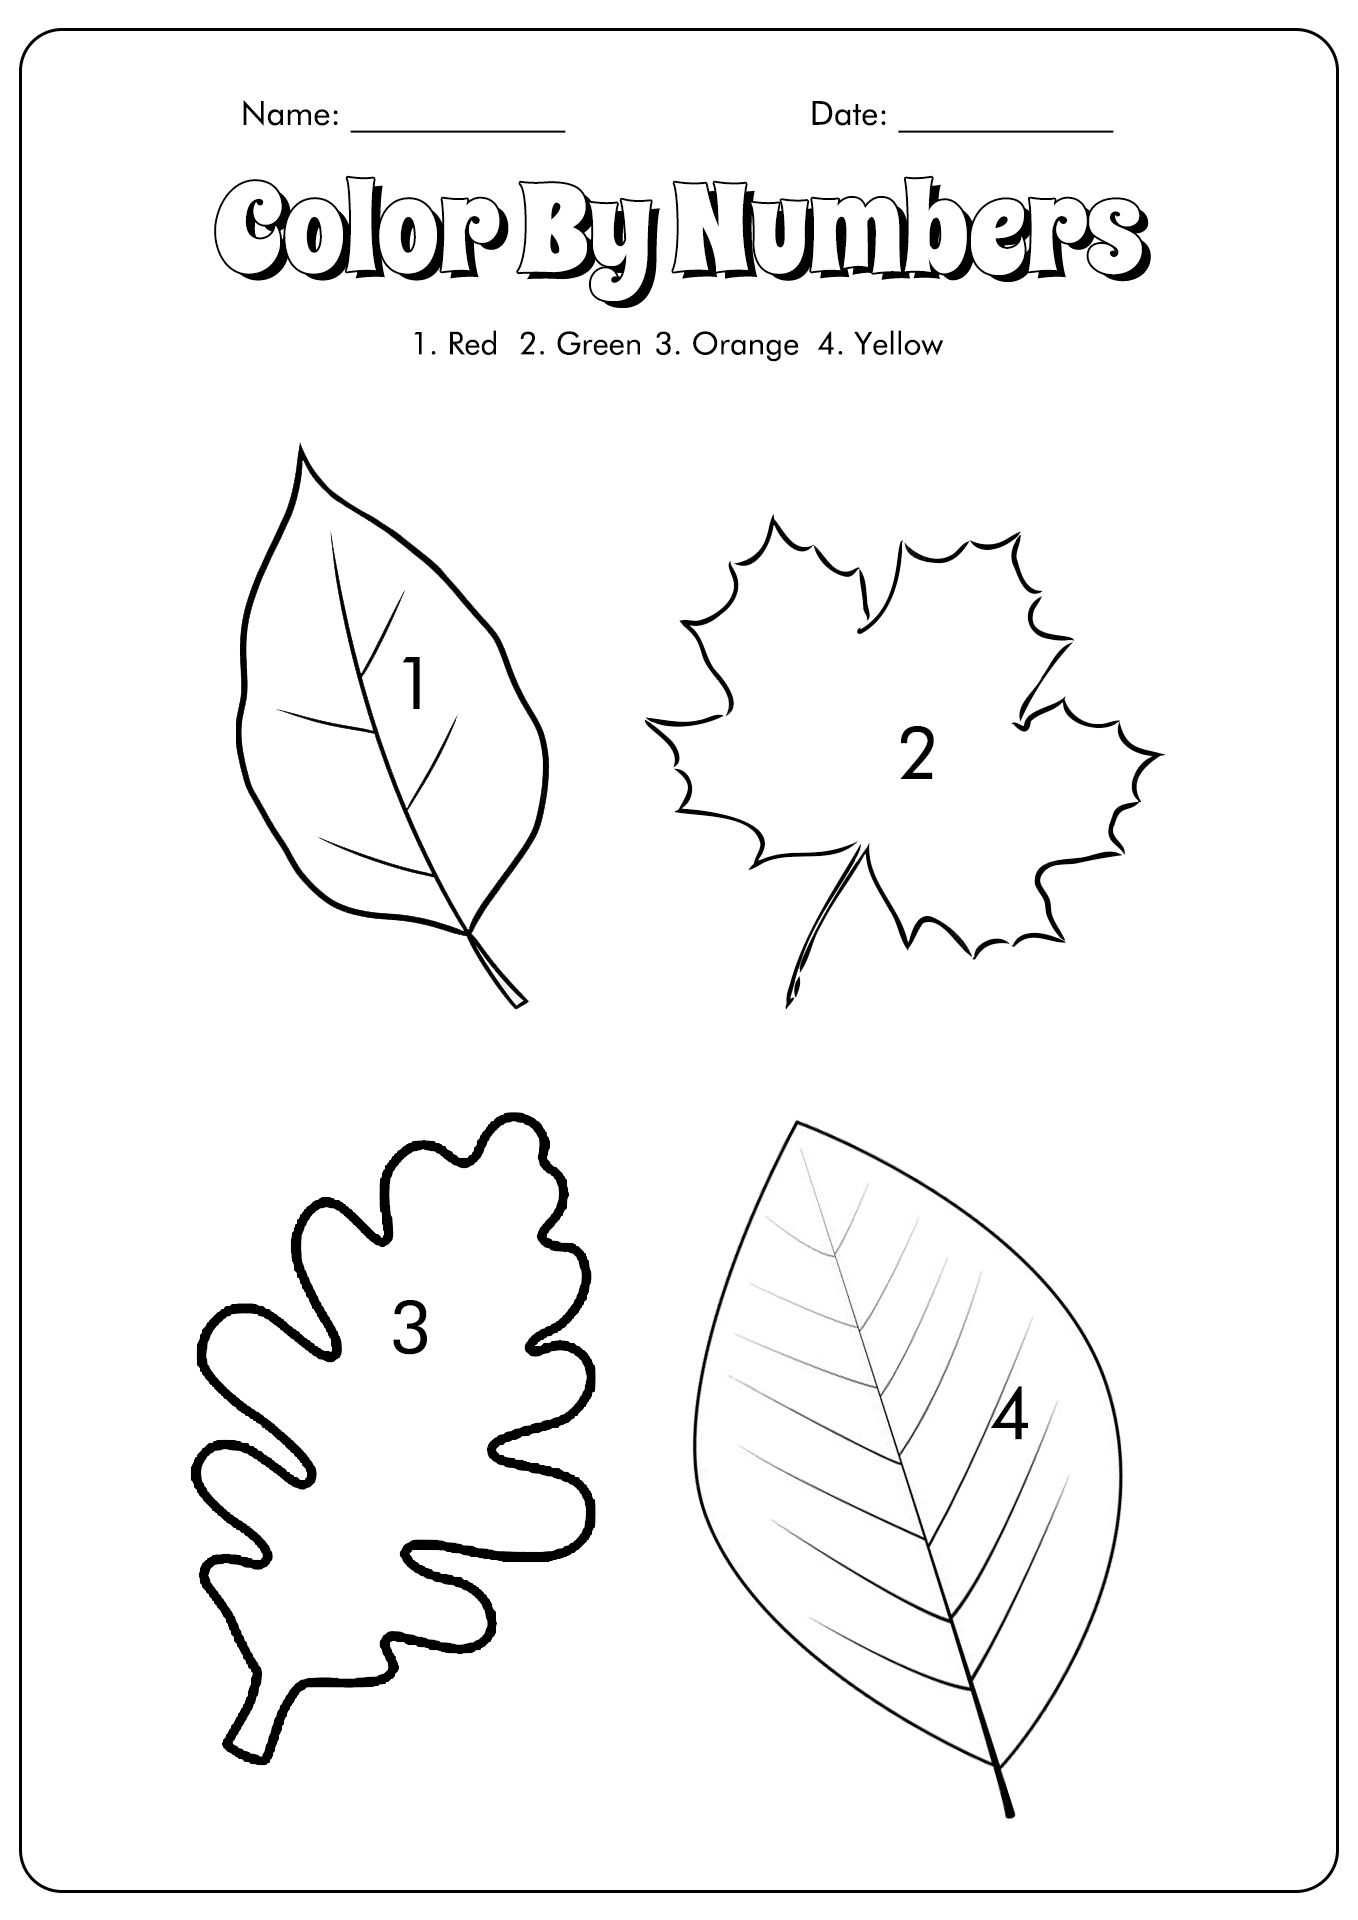 11 Best Images of Autumn Leaf Patterns Worksheets - Printable Fall